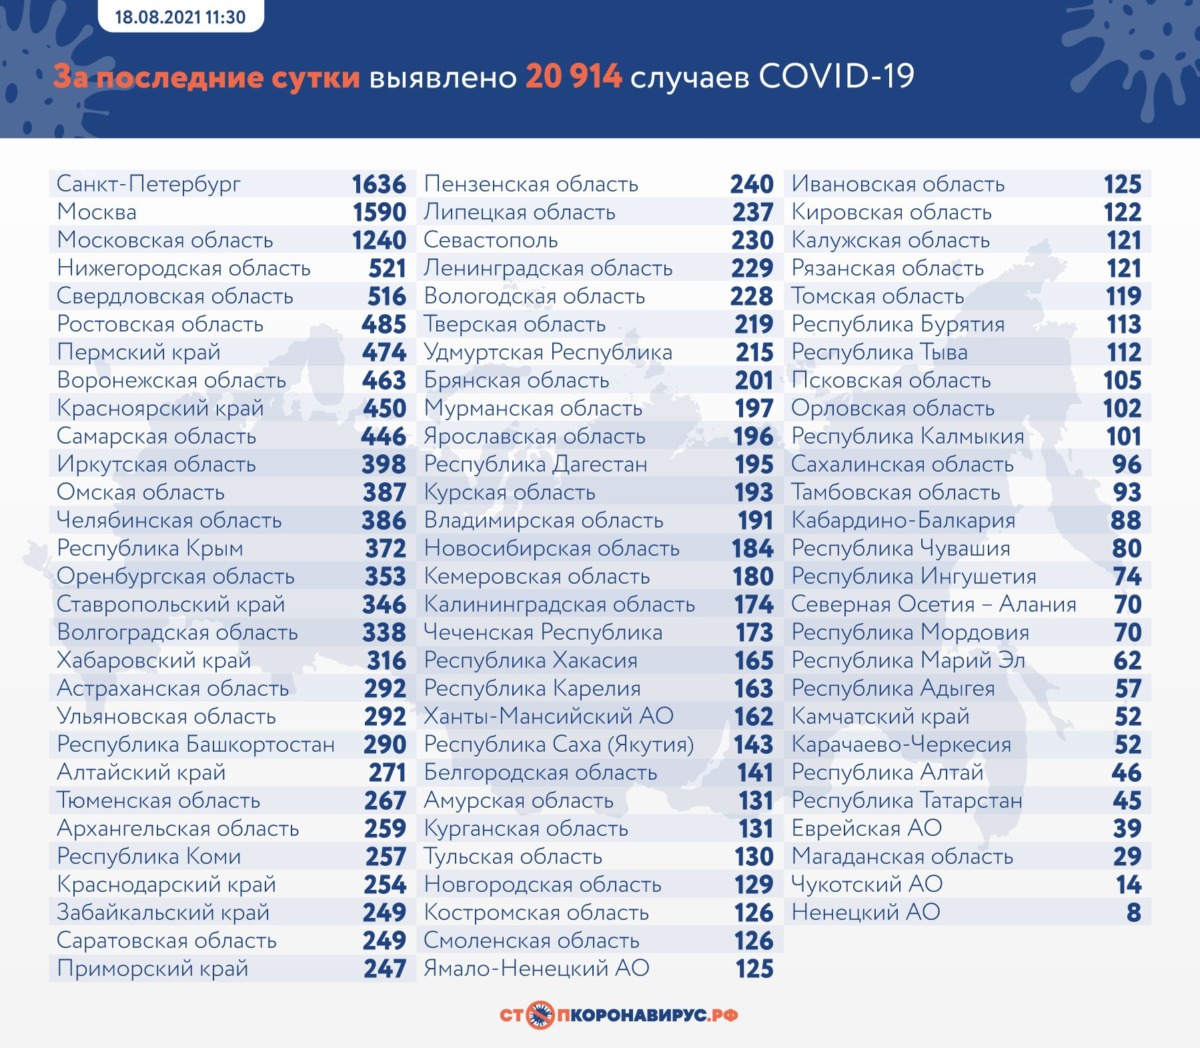 Статистика коронавируса в России на 18 августа